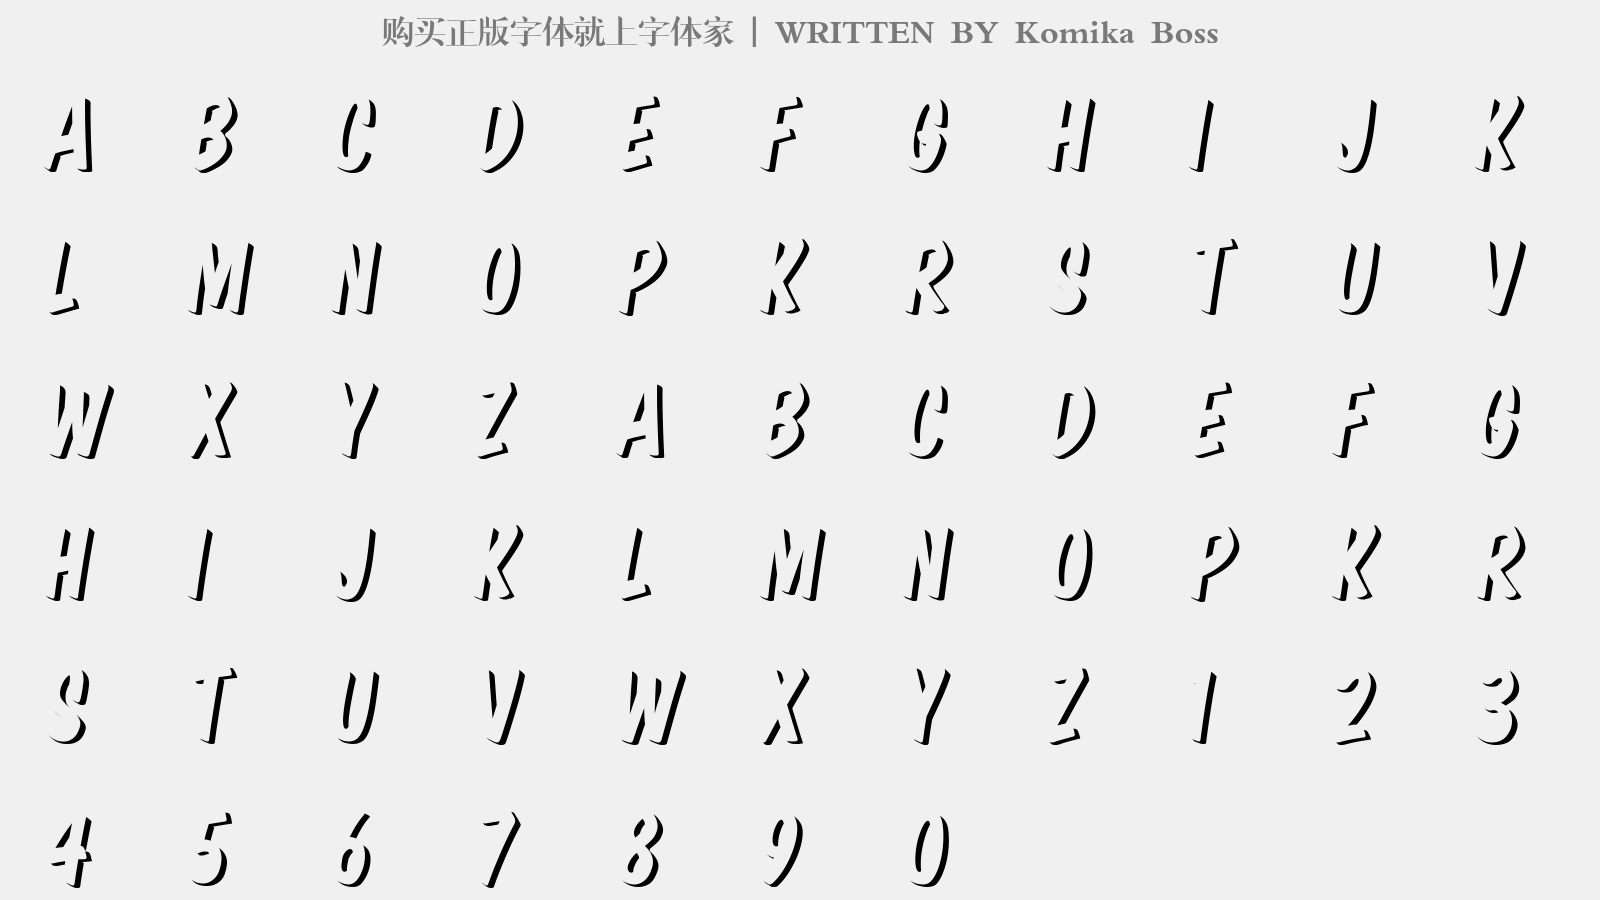 Komika Boss - 大写字母/小写字母/数字